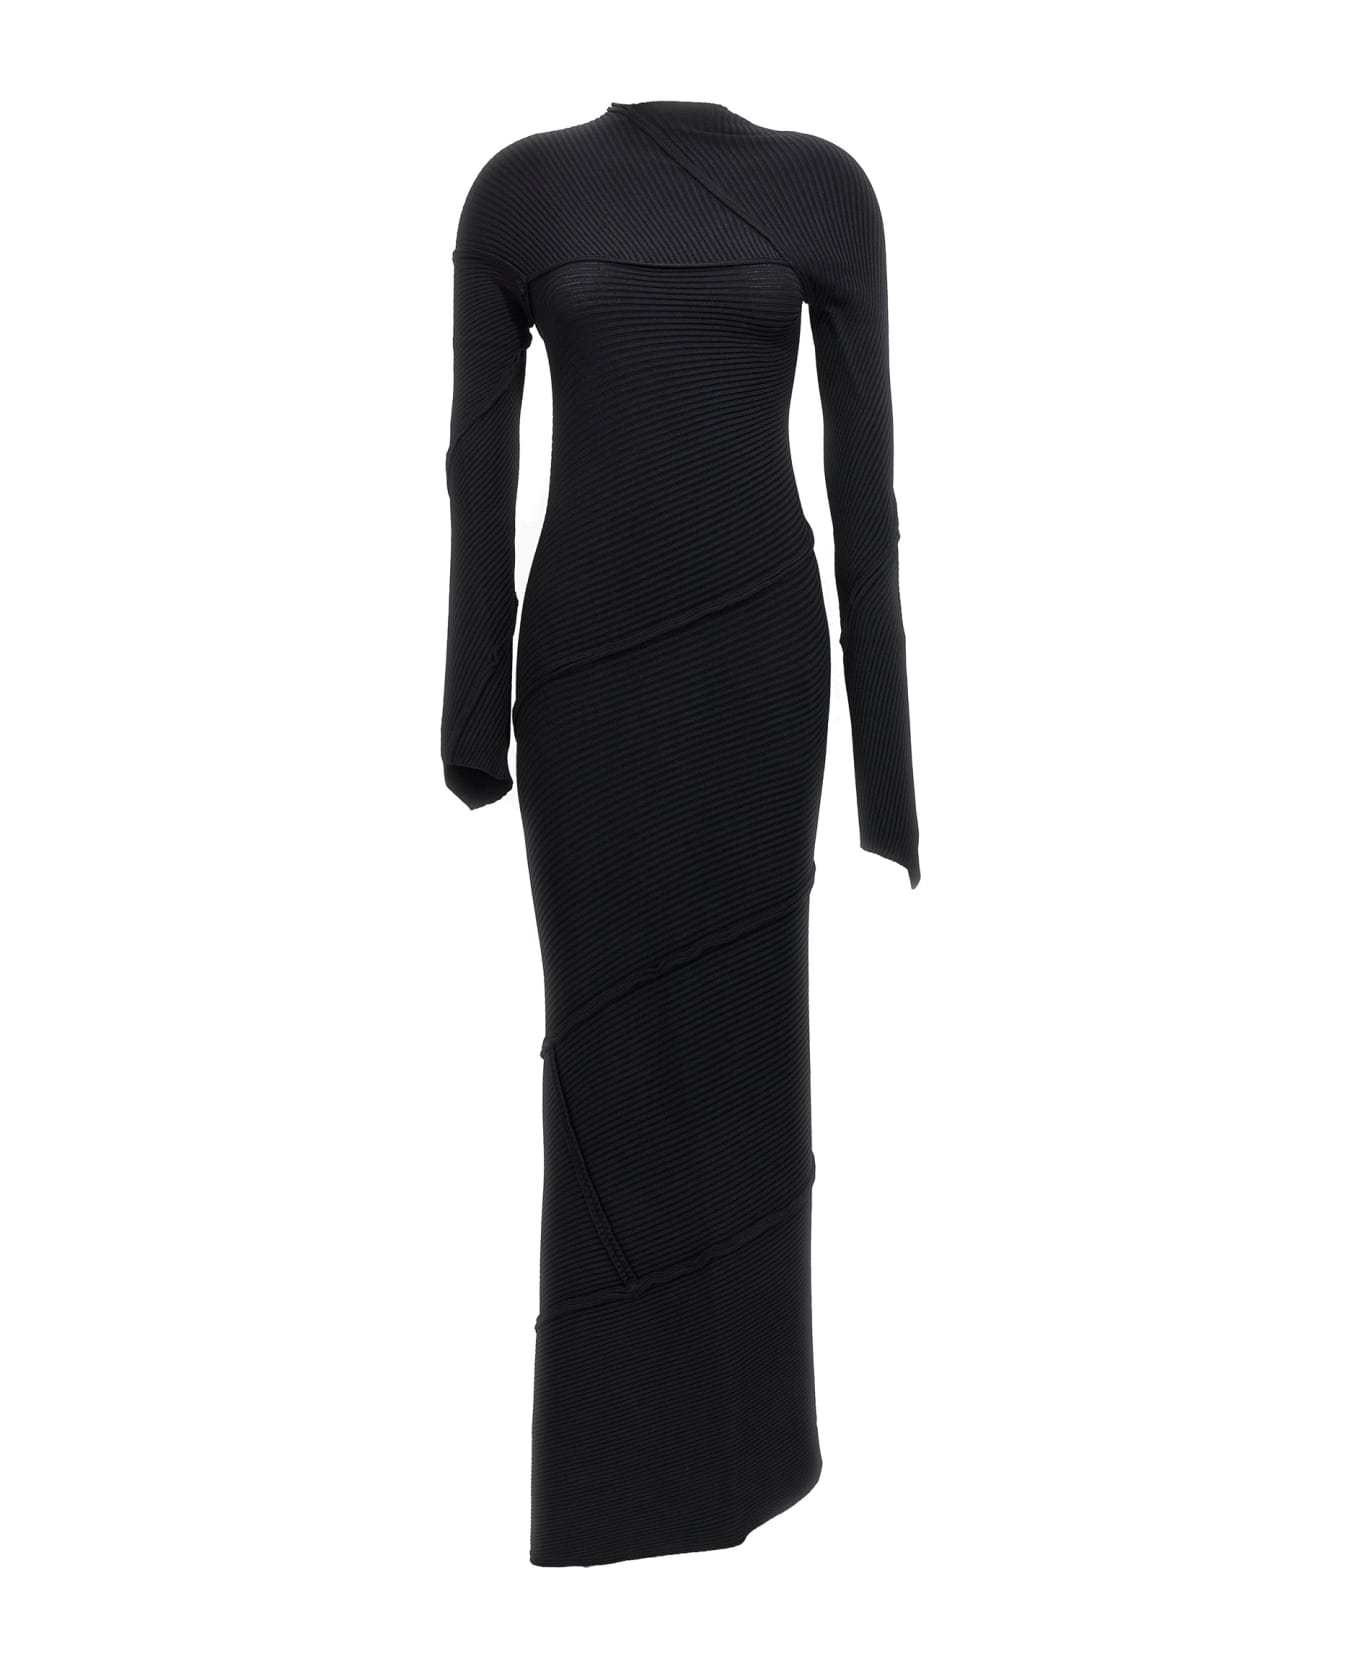 Balenciaga Spiral Knitted Dress - black